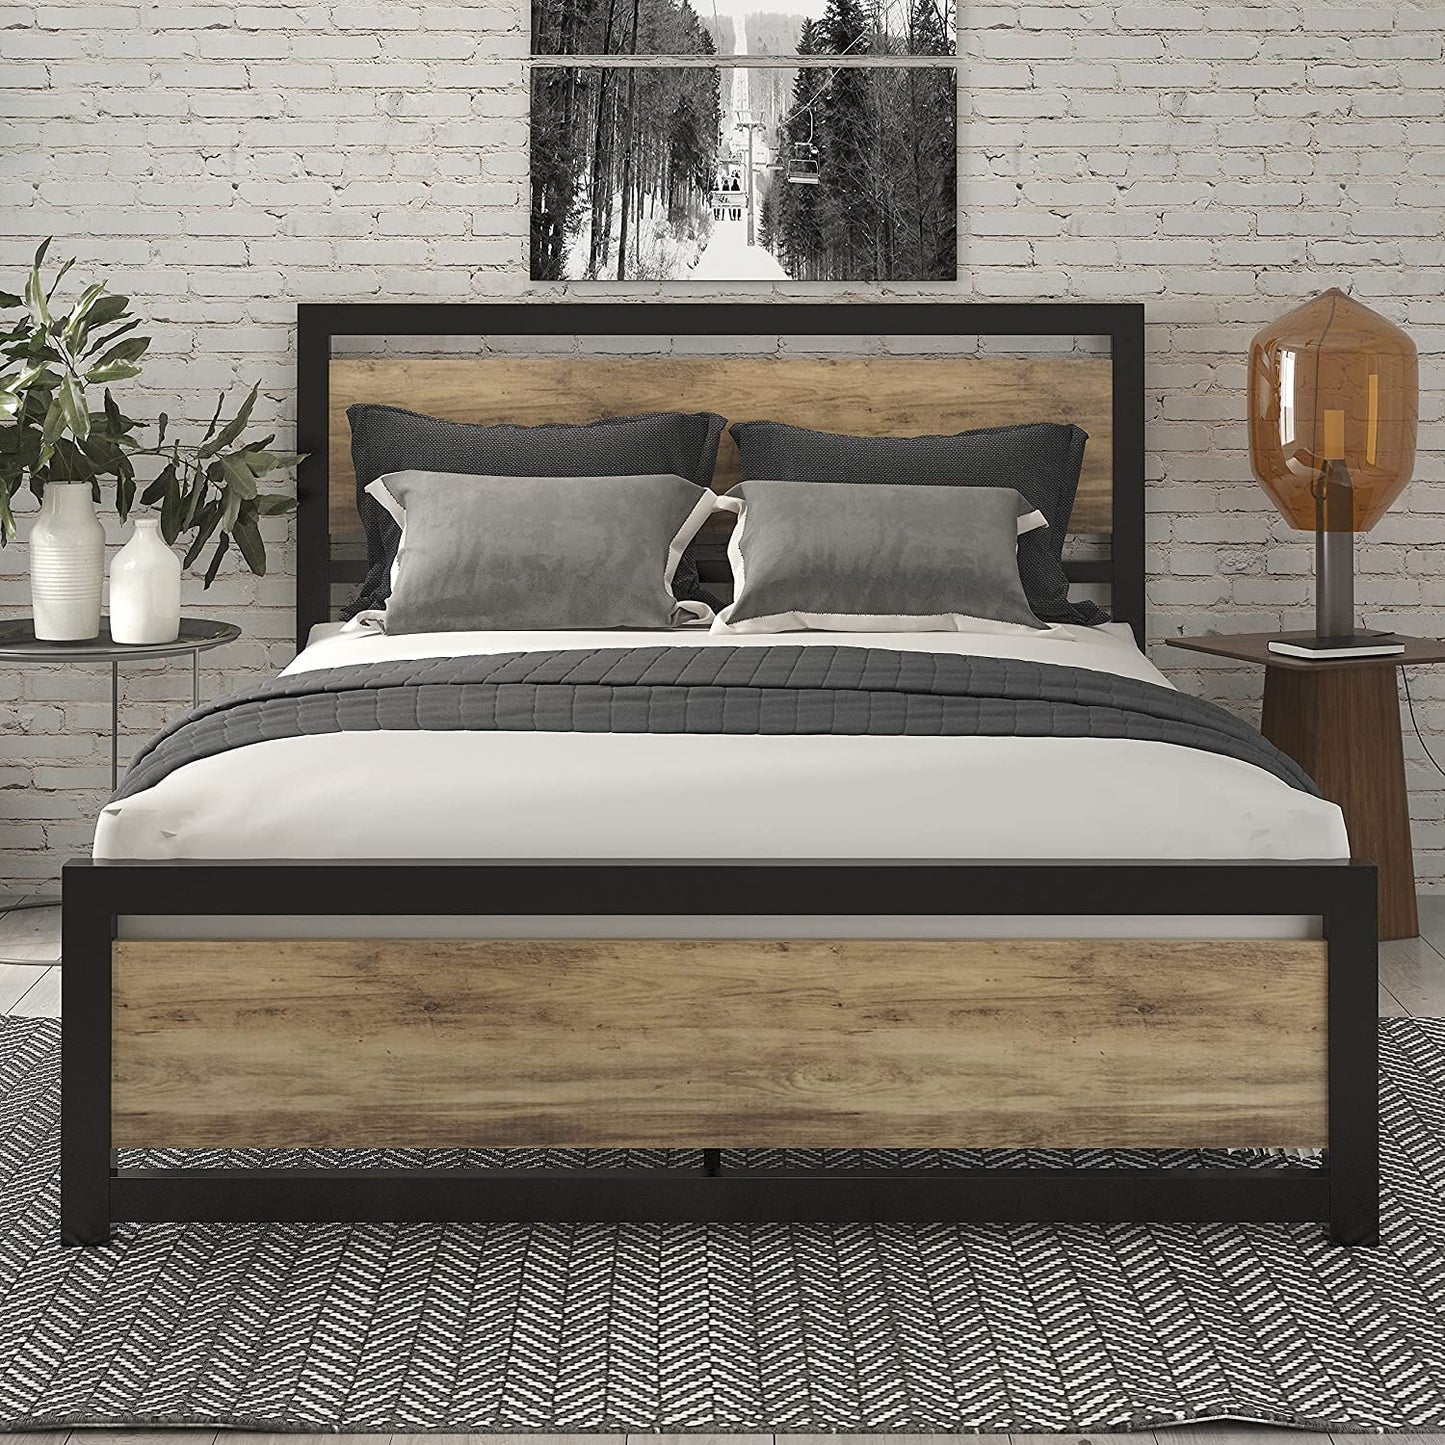 Bowzar King Size 6X6.5 Feet Bed Frame with Modern Wooden Headboard Heavy Duty Platform Metal Bed